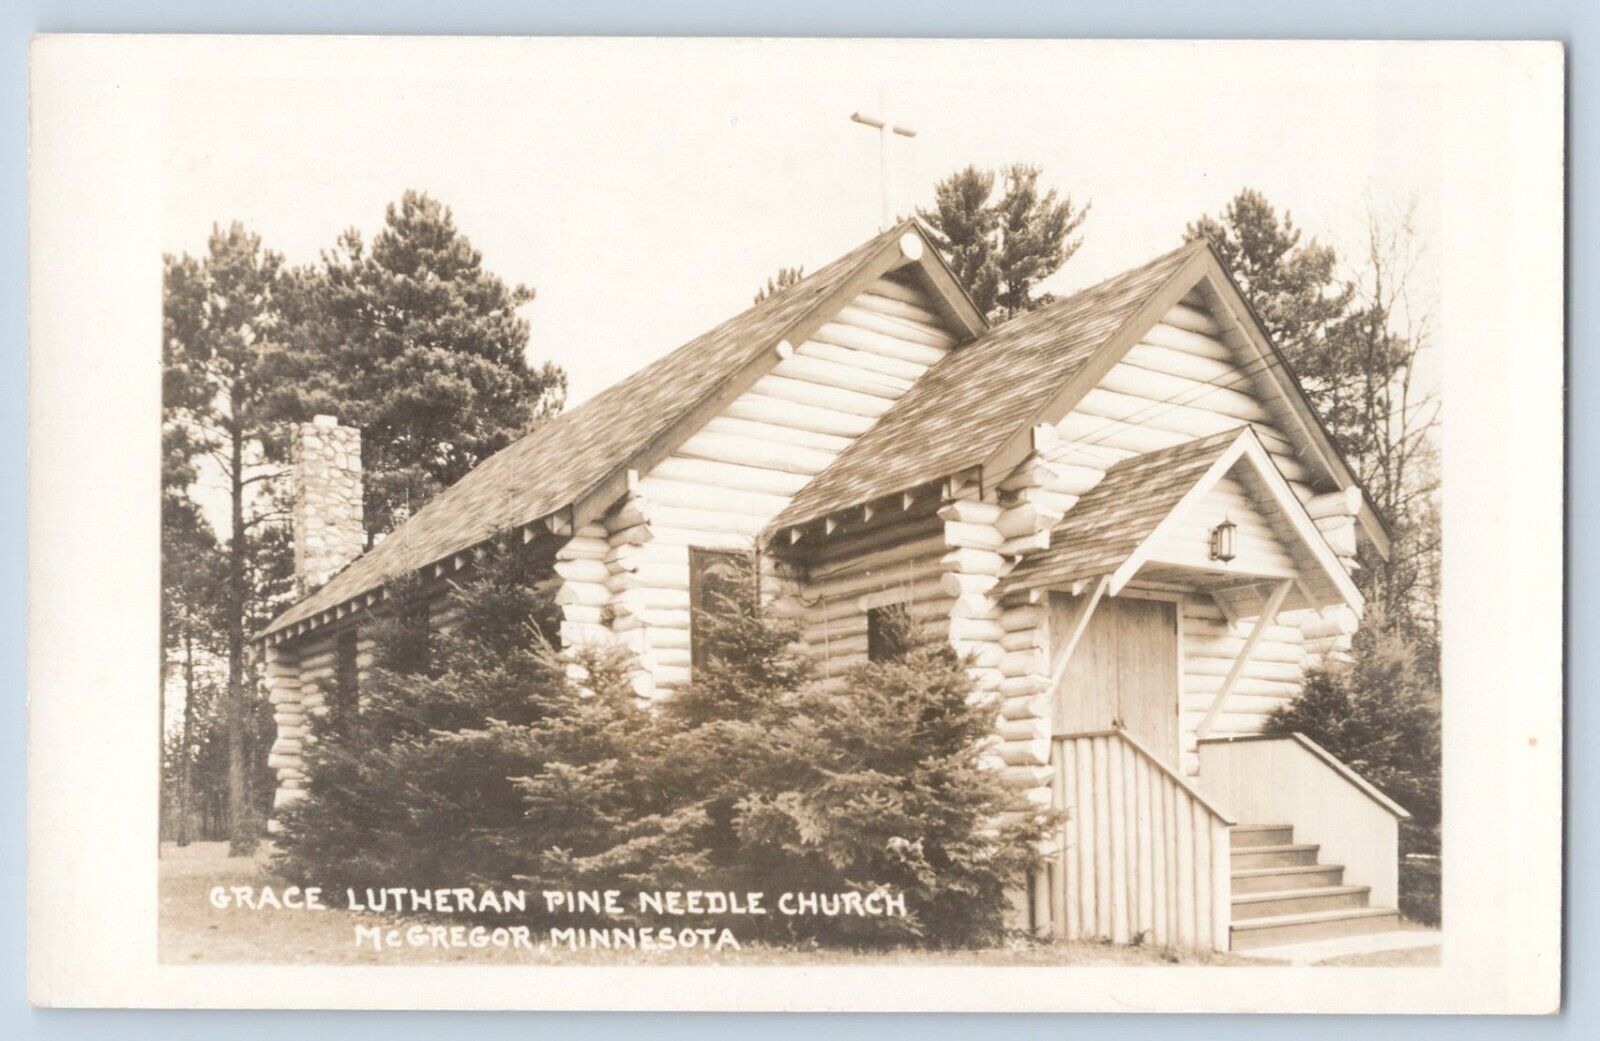 McGregor Minnesota Grace Lutheran Pine Needle Church Real Photo Postcard RPPC